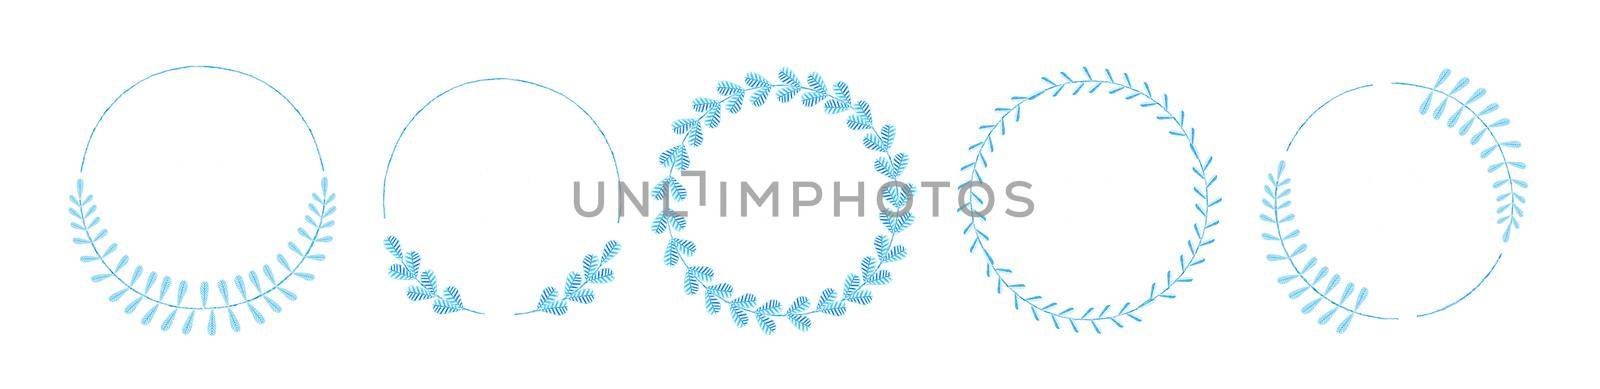 Set of differen blue silhouette round cartoon wreaths depicting an award, achievement, heraldry, nobility, emblem. by TatiSat